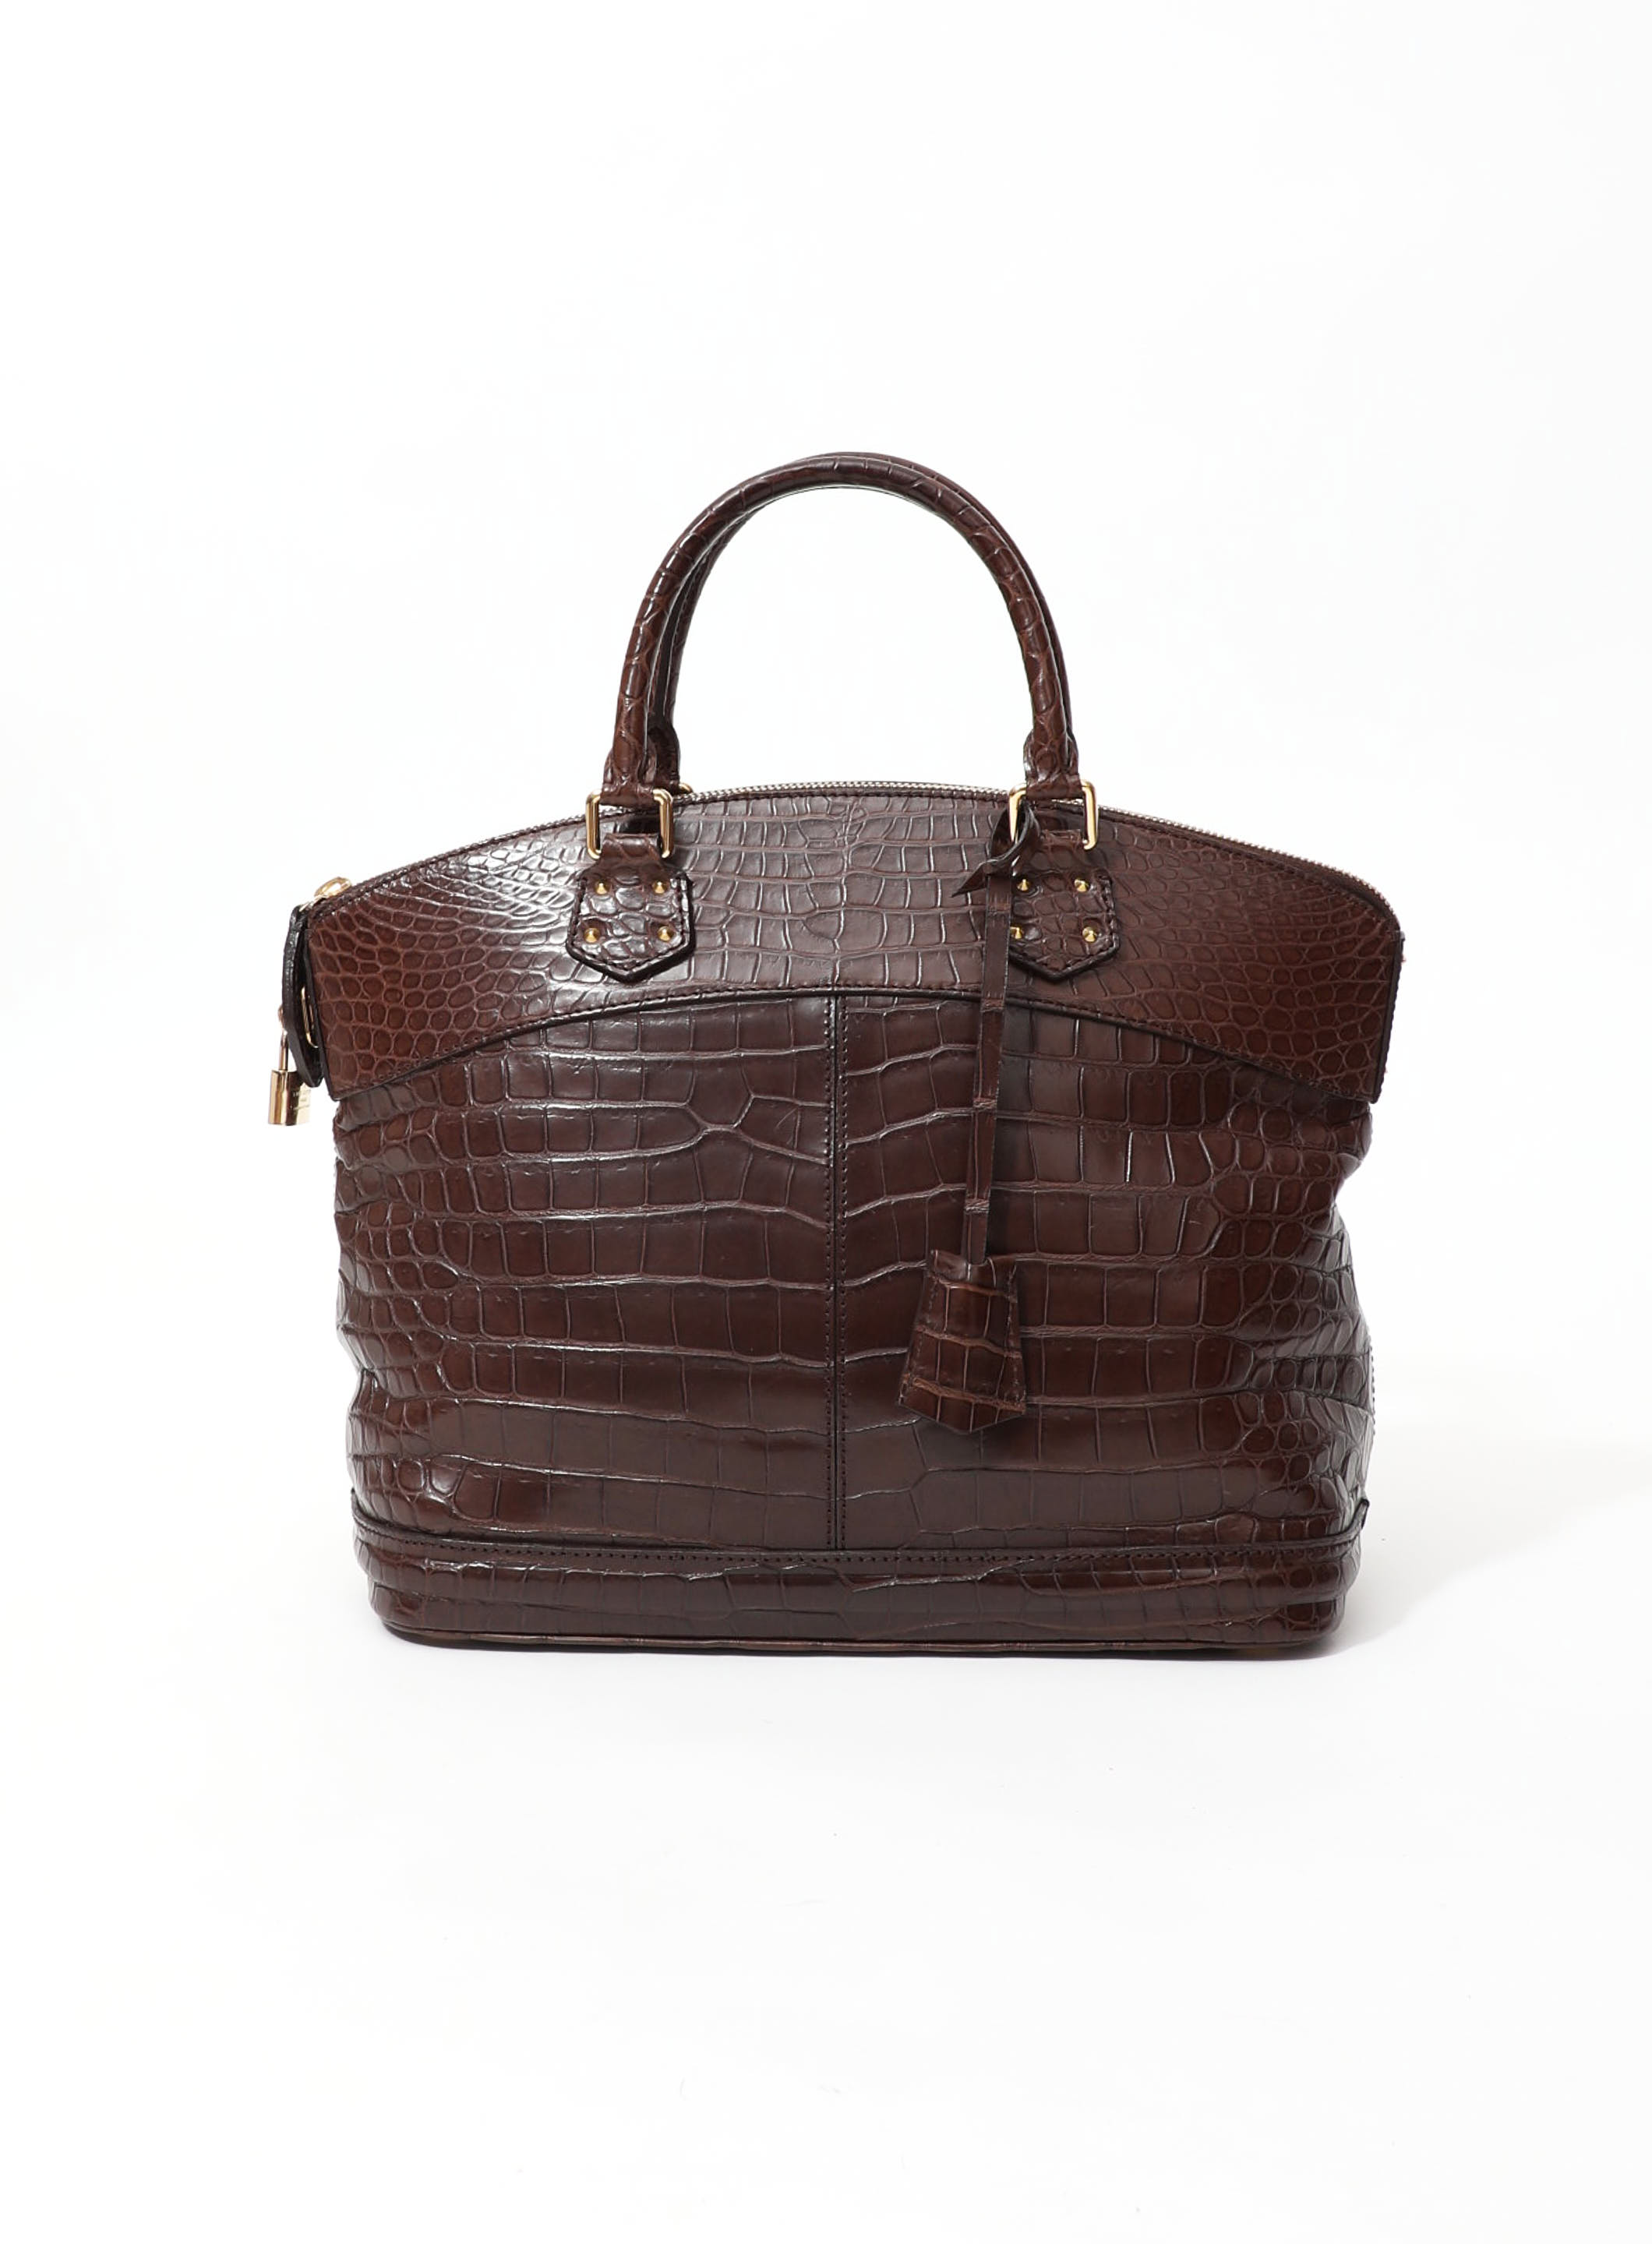 Miu Miu Vintage Leather Handbag 1990s Dark Brown Top -  Israel